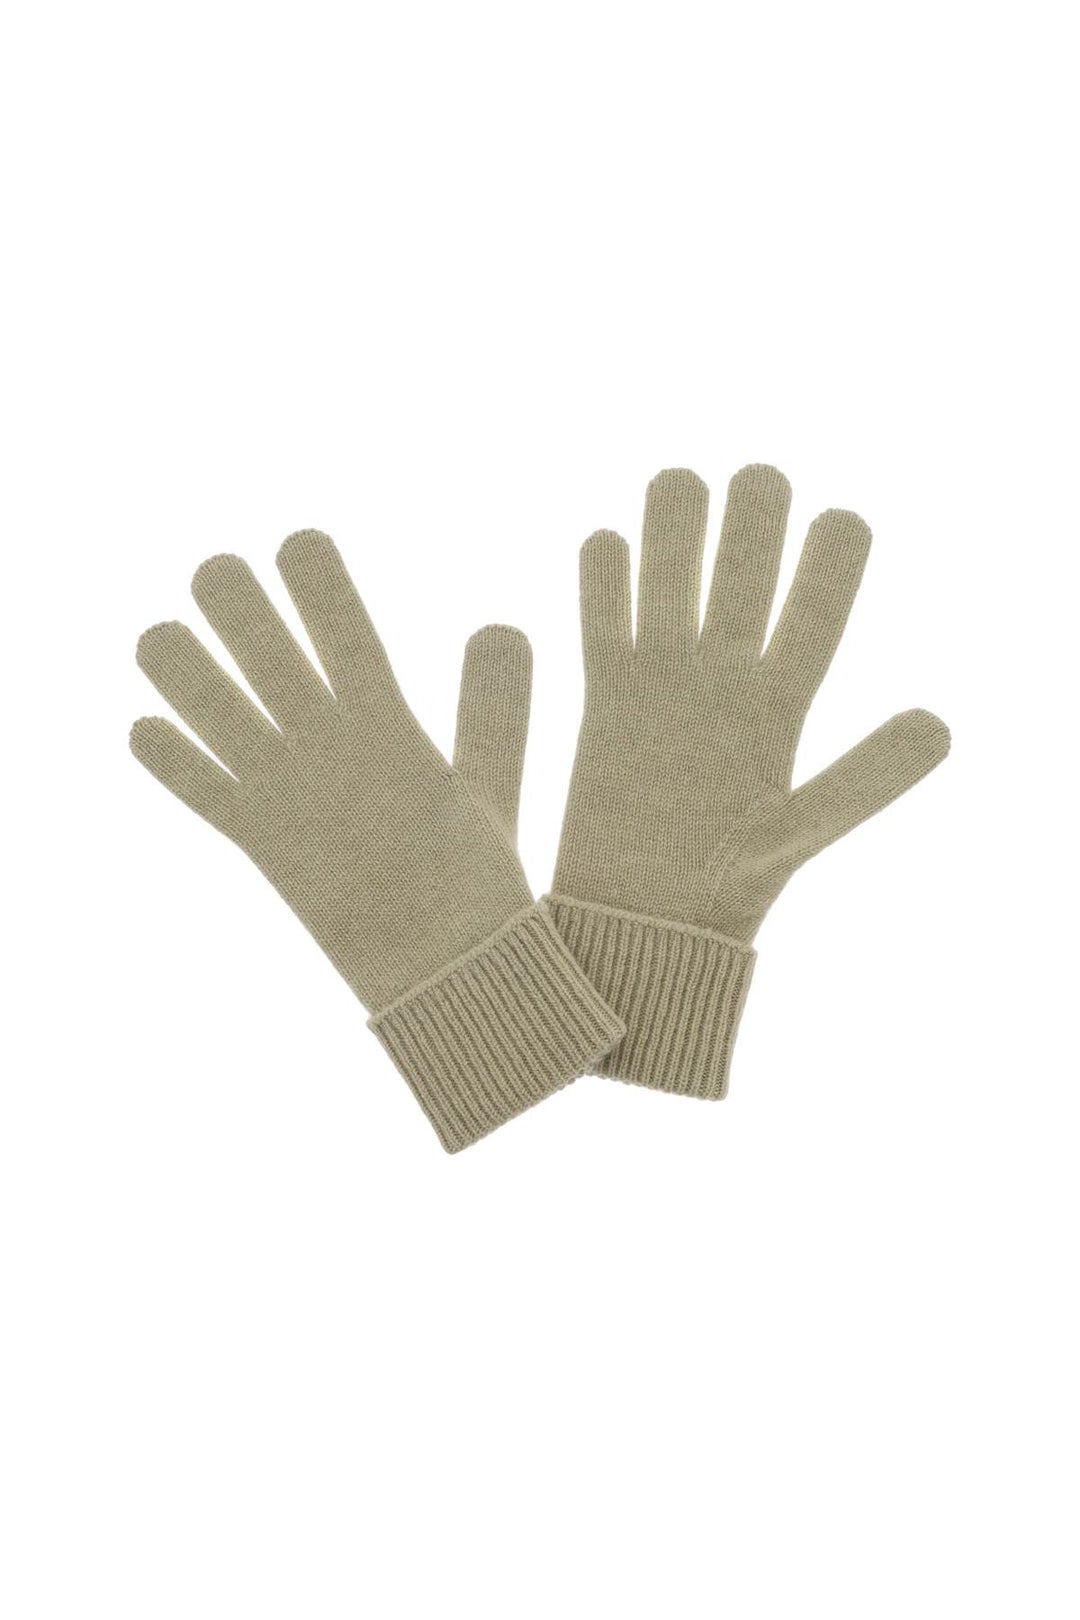 Burberry Cashmere Gloves   Khaki